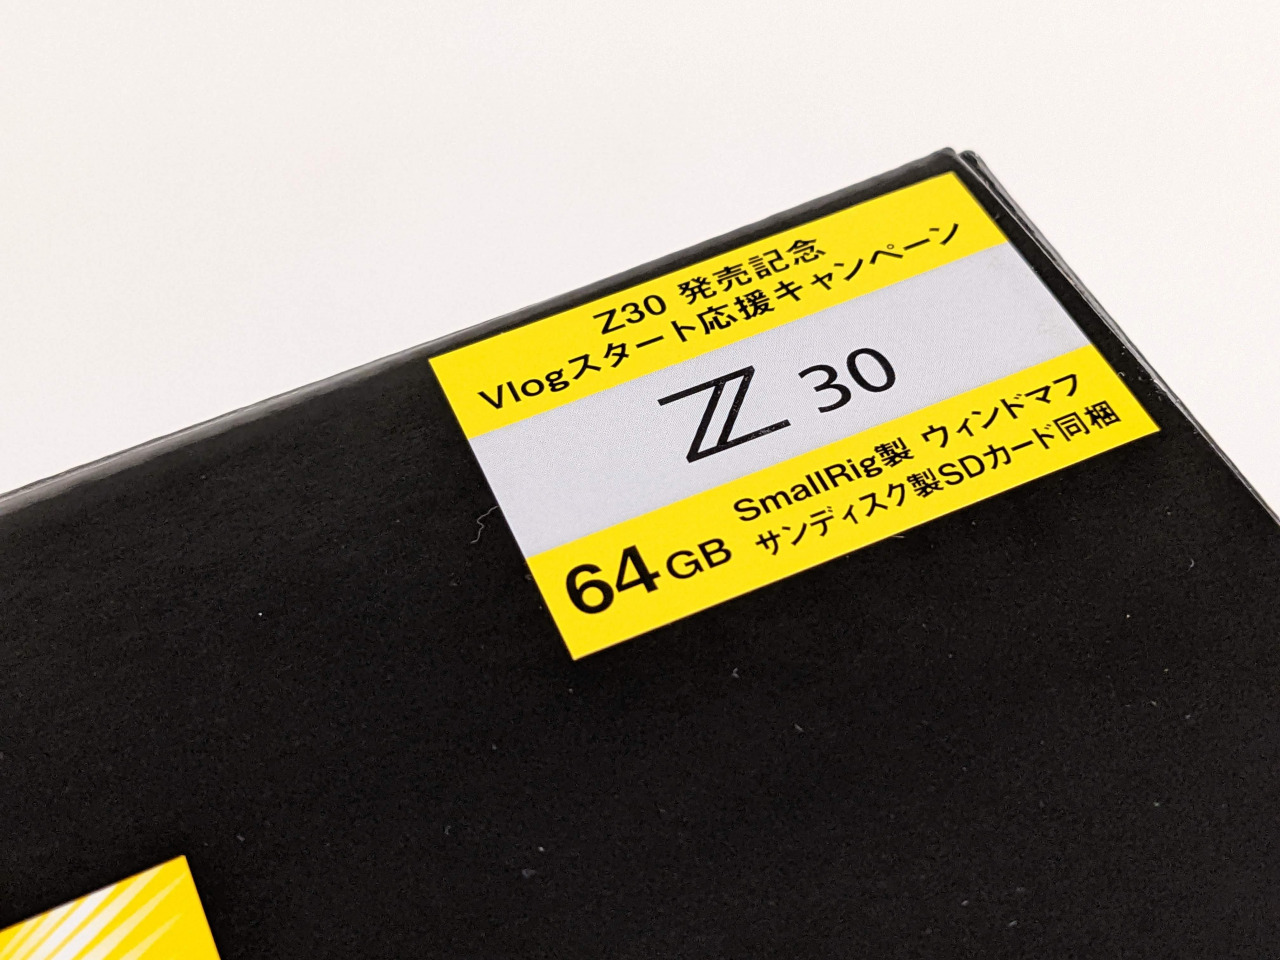 「Z 30 発売記念 VLOG応援キャンペーン」対象商品